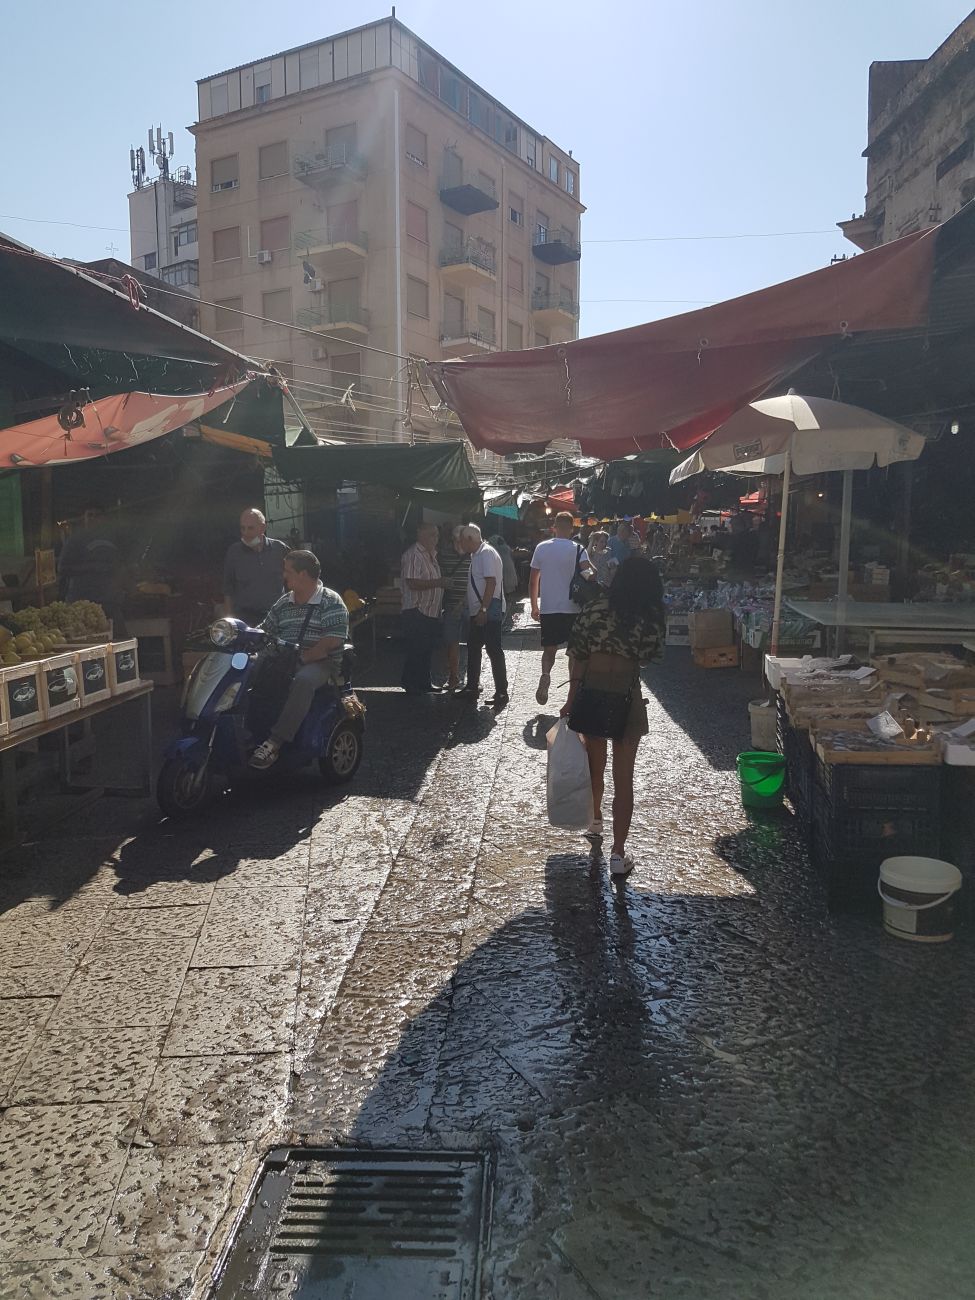 Ballero Market in Palermo